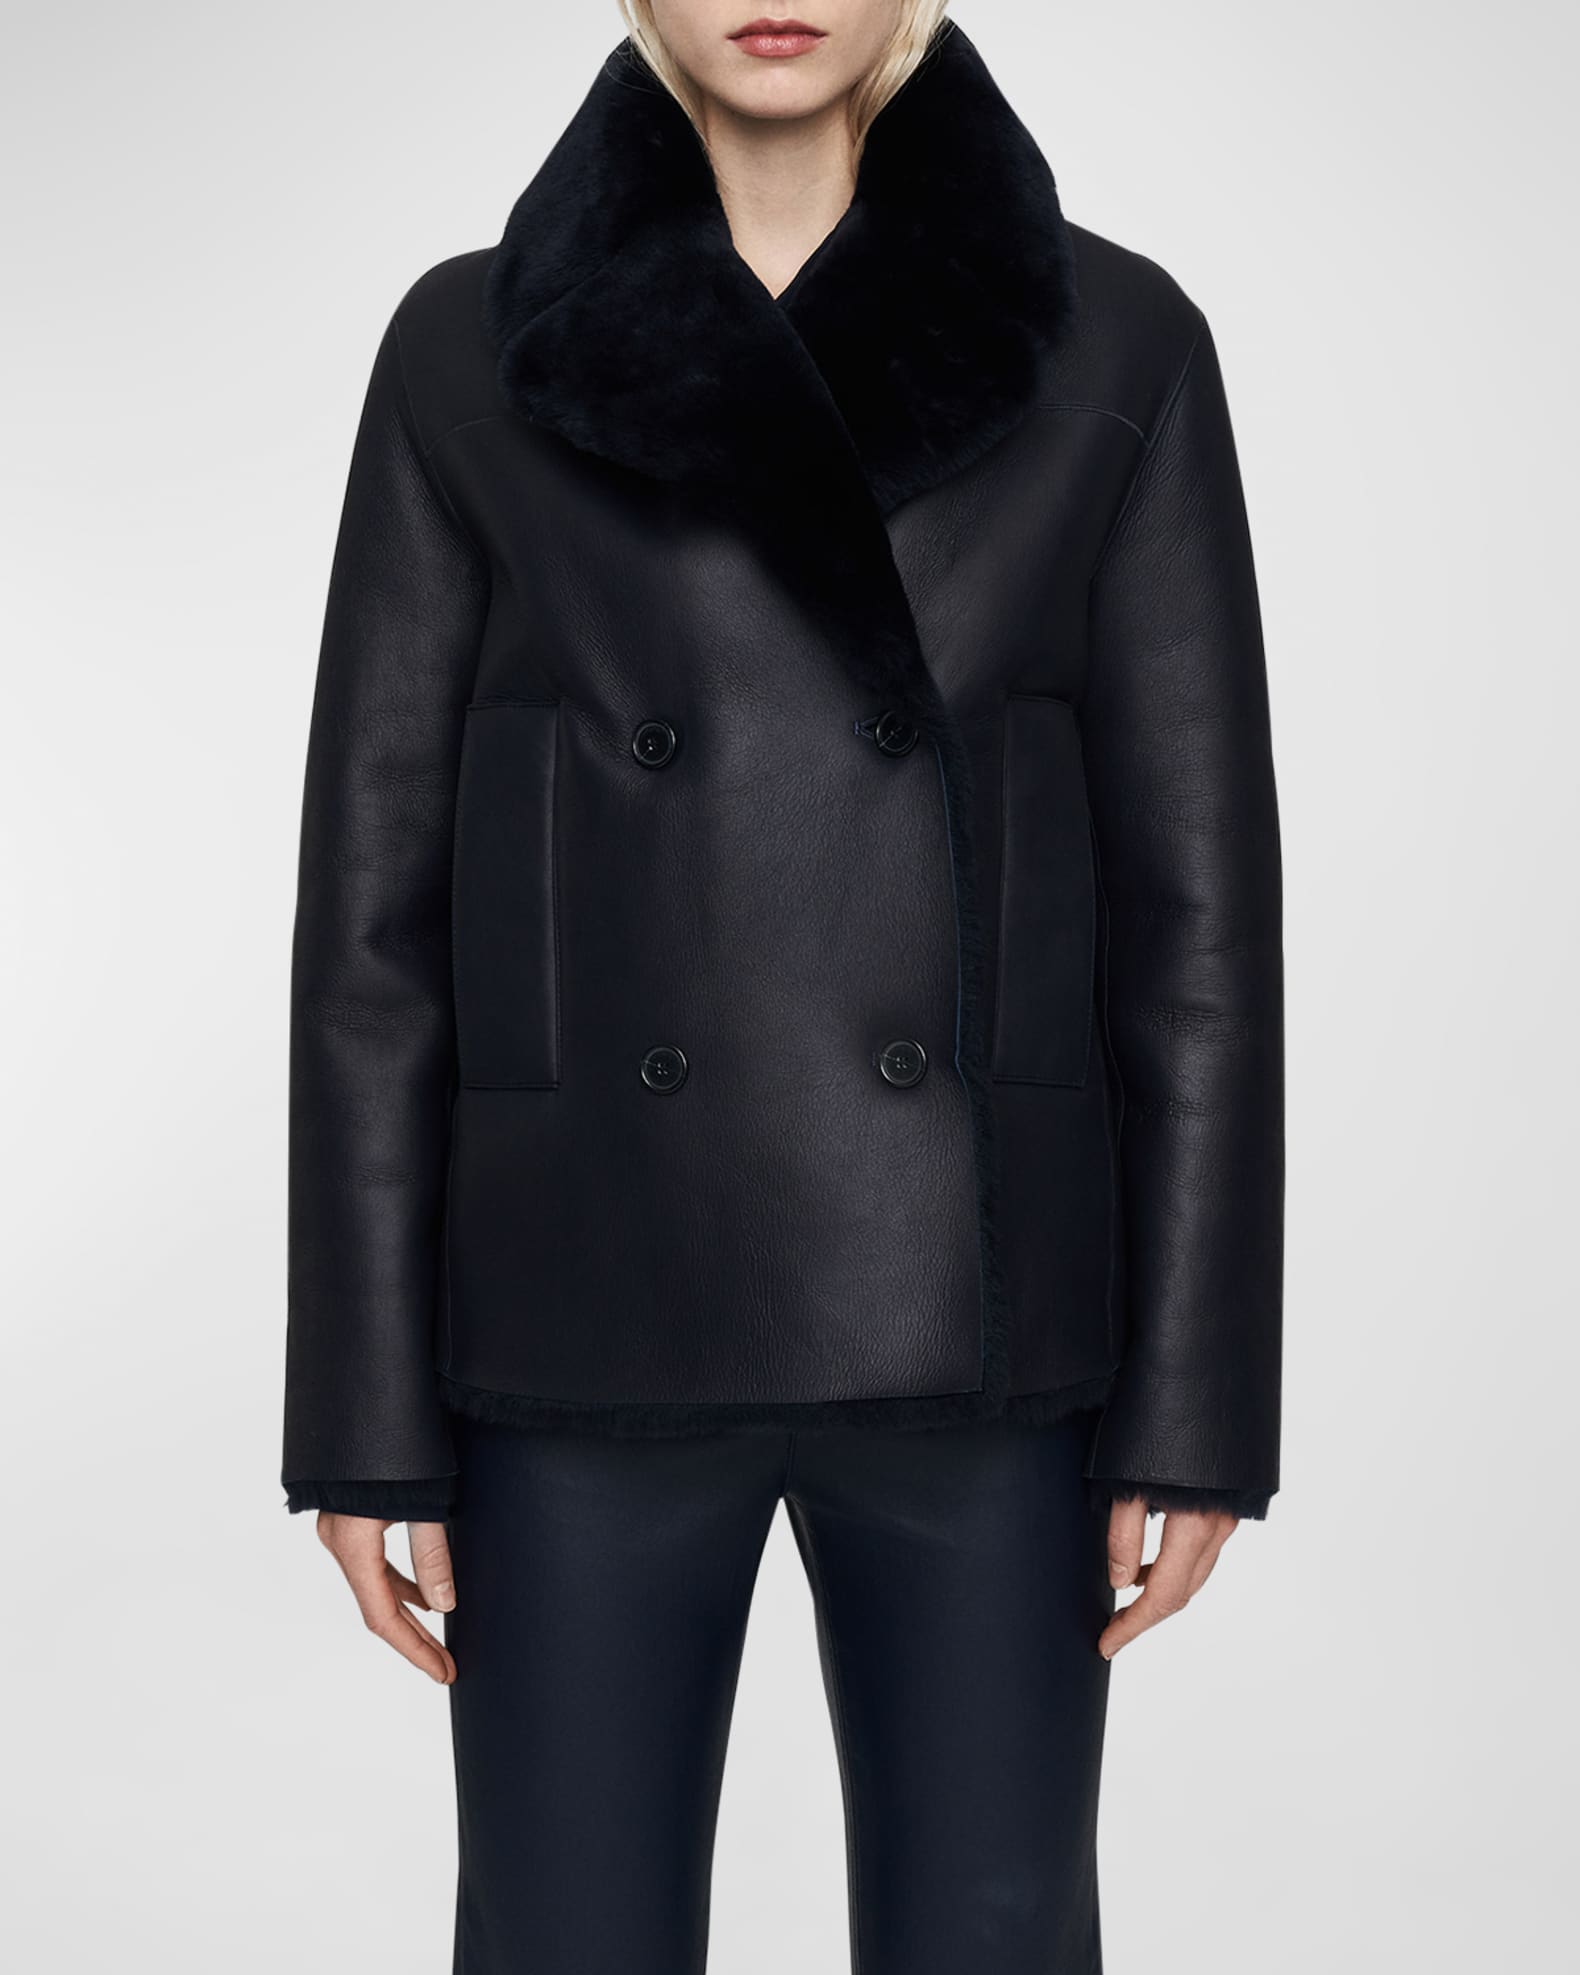 Women's Louis Vuitton Coats from $2,530